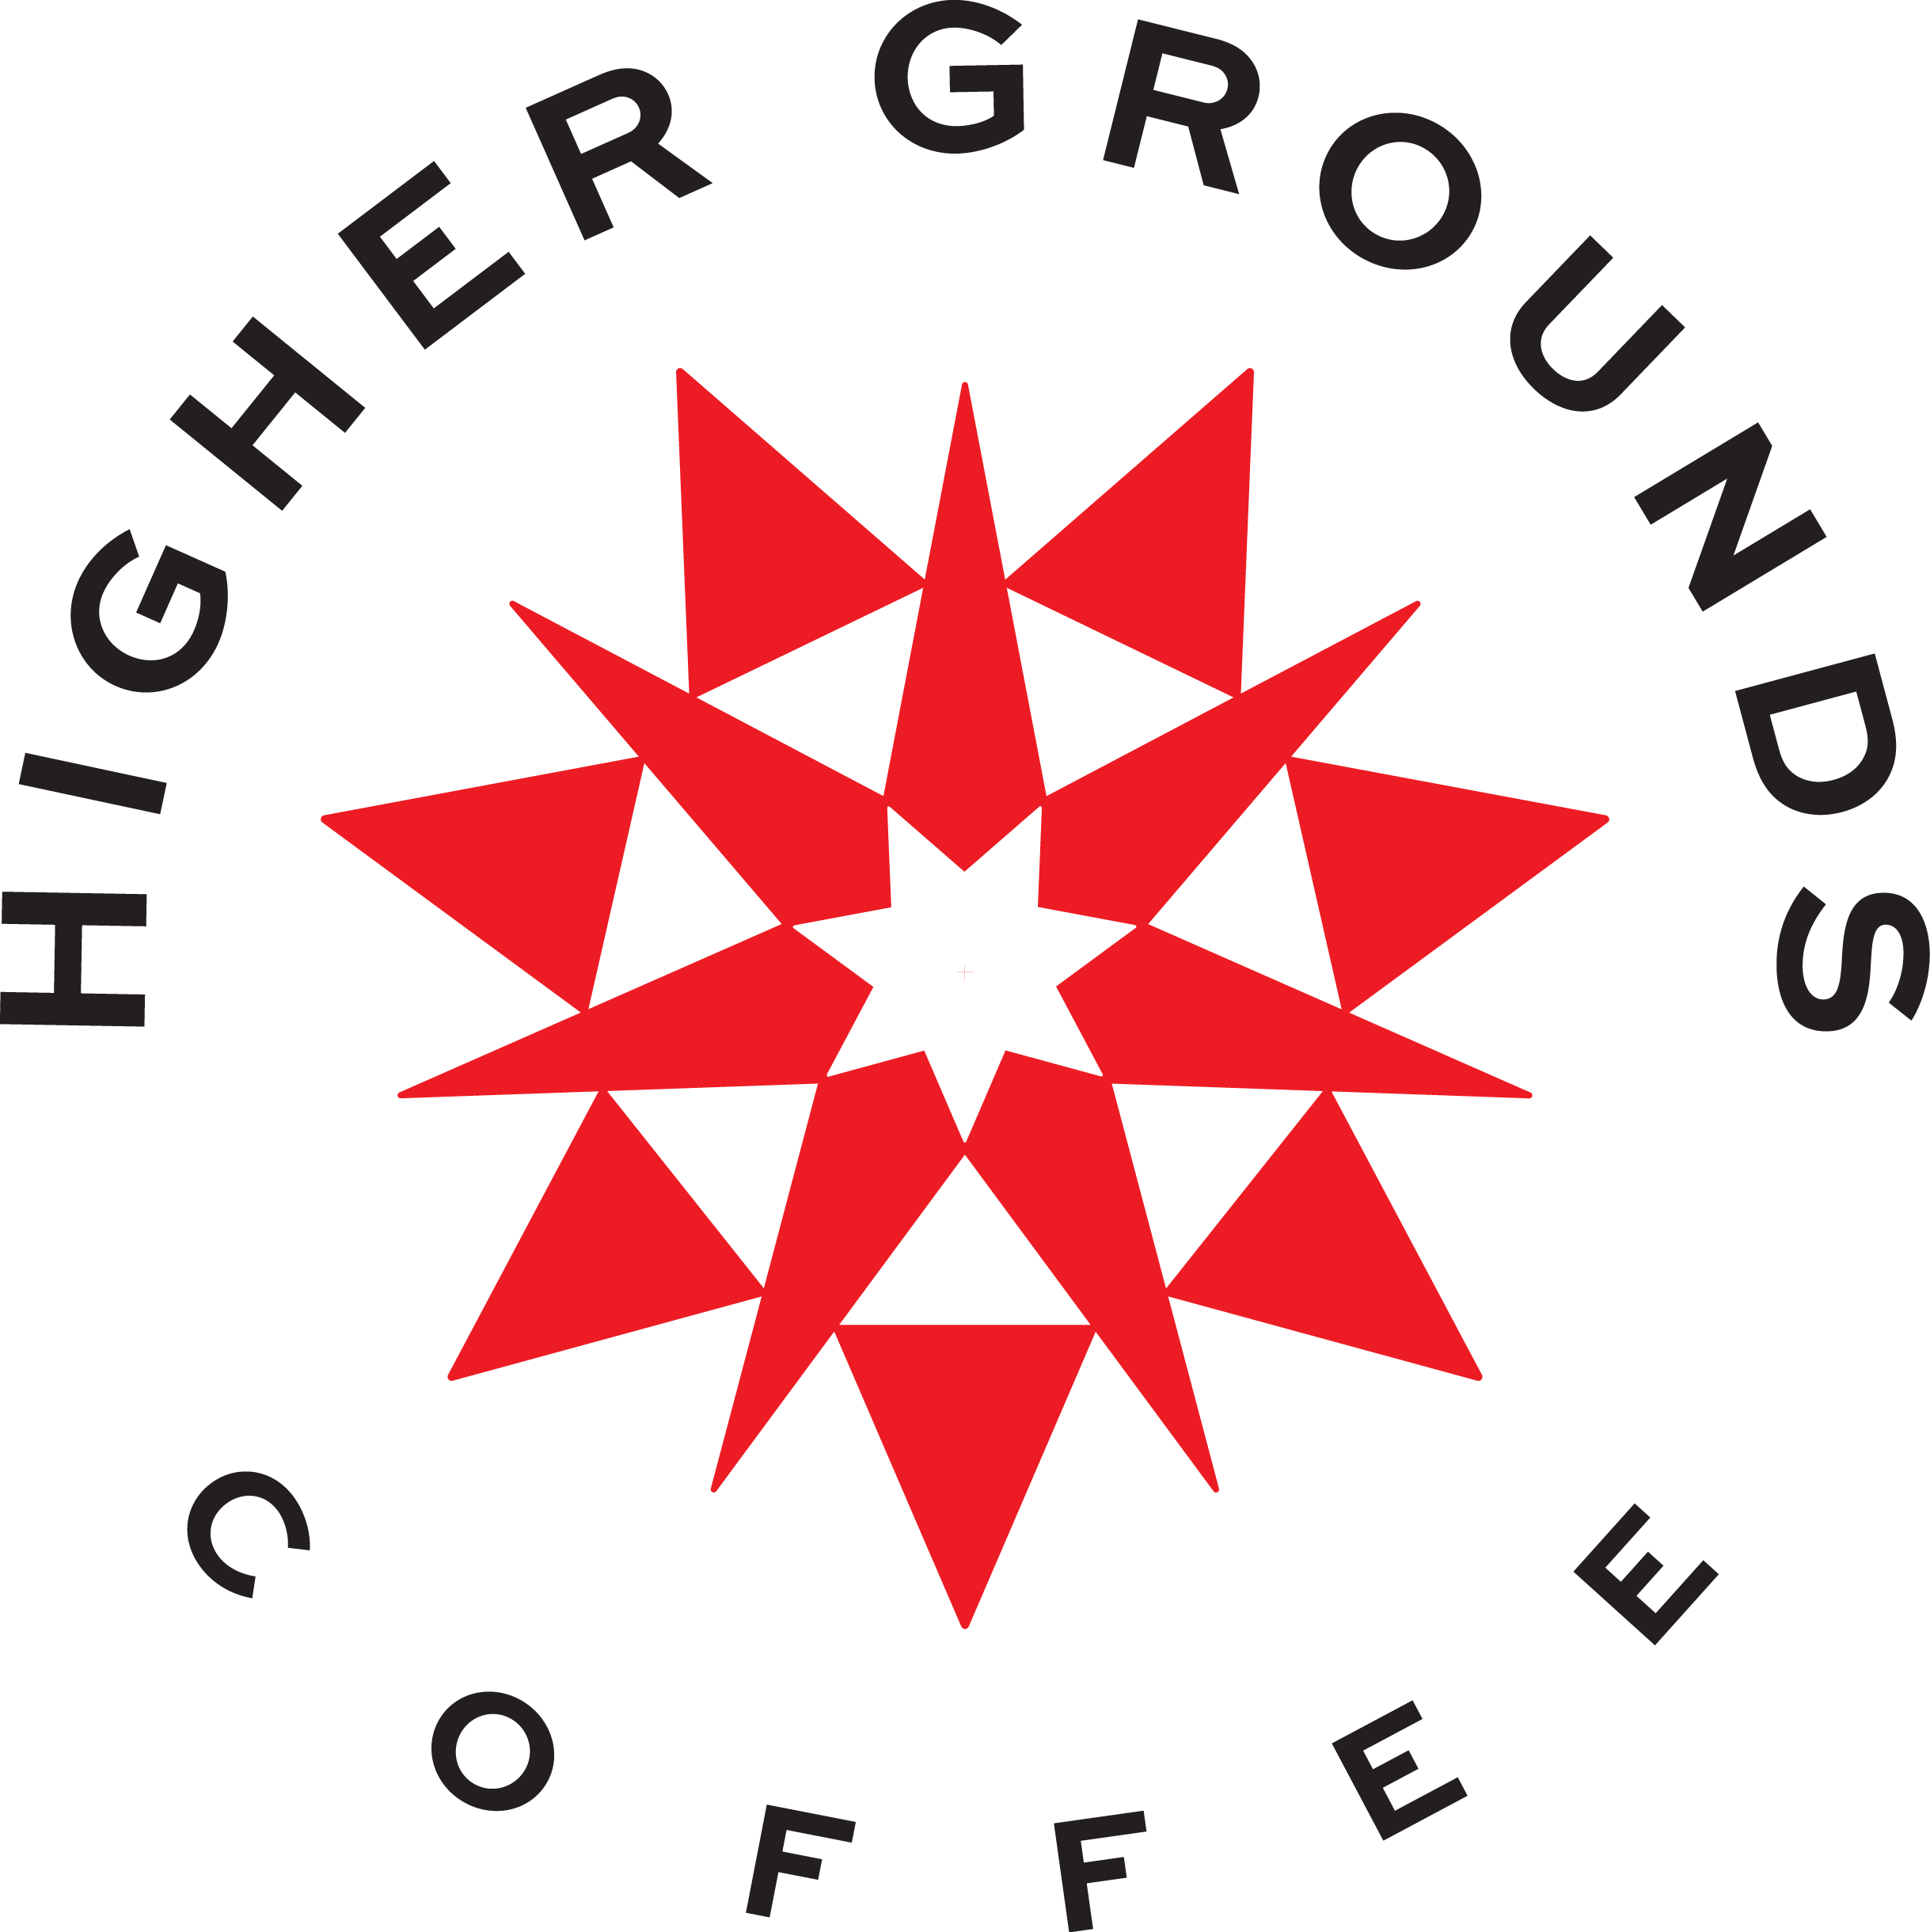 HG Coffee_circle logo_red star.png